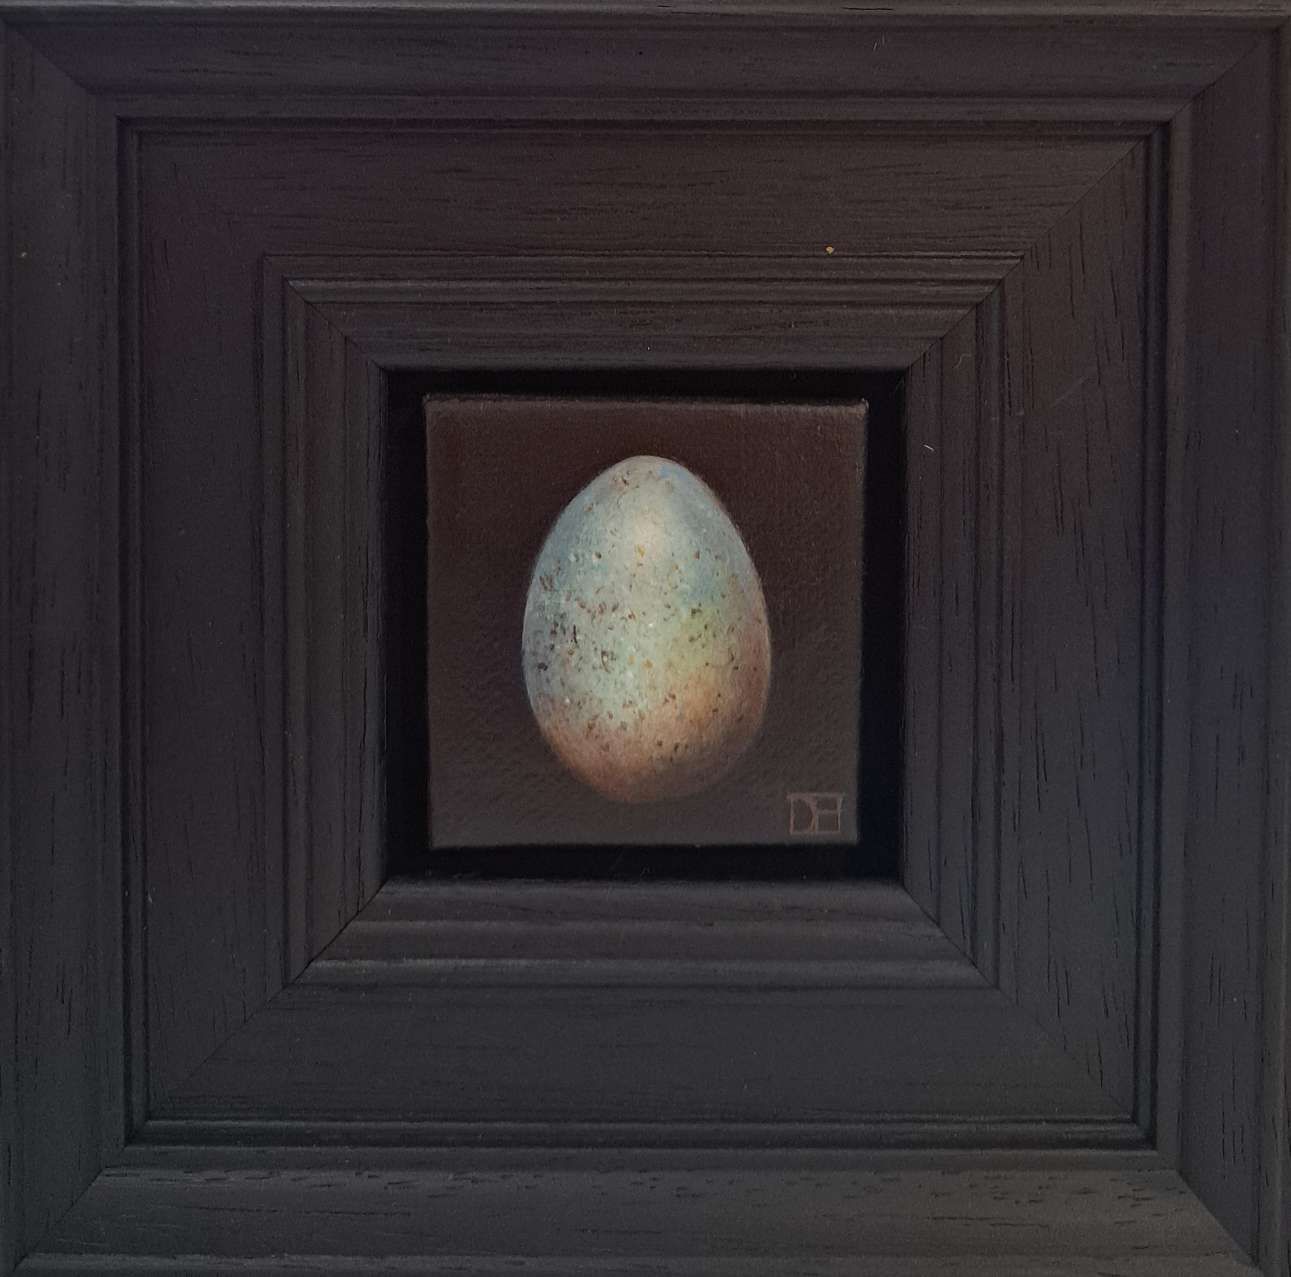 Pocket Pale Blue Blackbird's Egg 2 c by Dani Humberstone